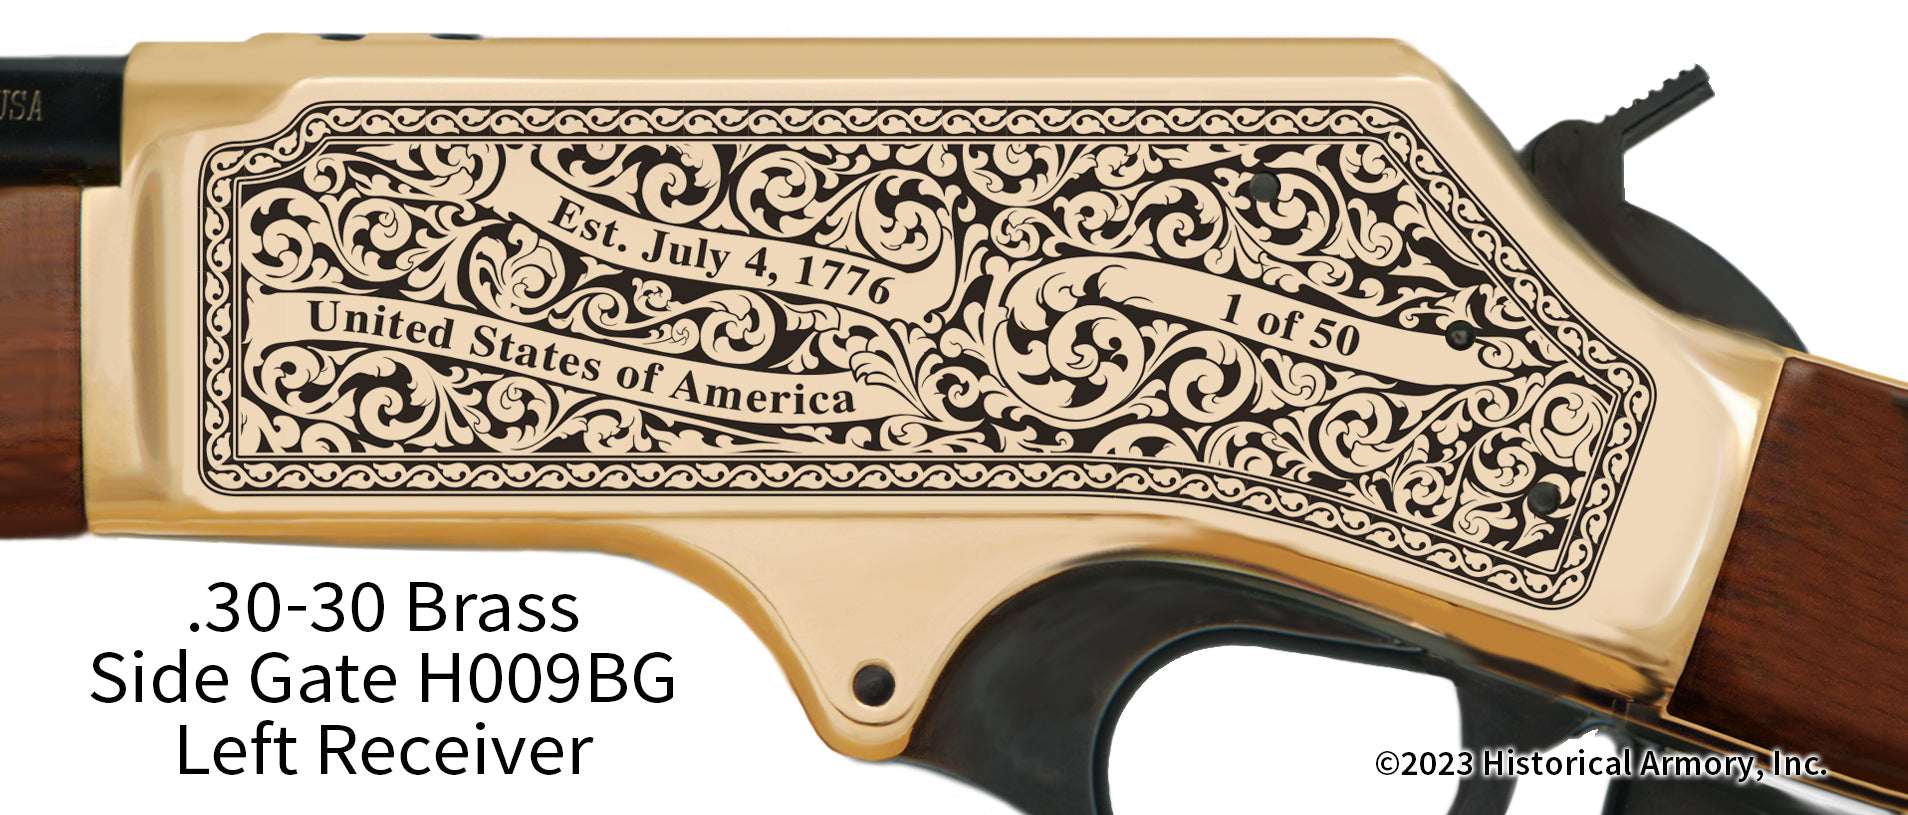 Greene County Illinois History Engraved Henry .30-30 Rifle